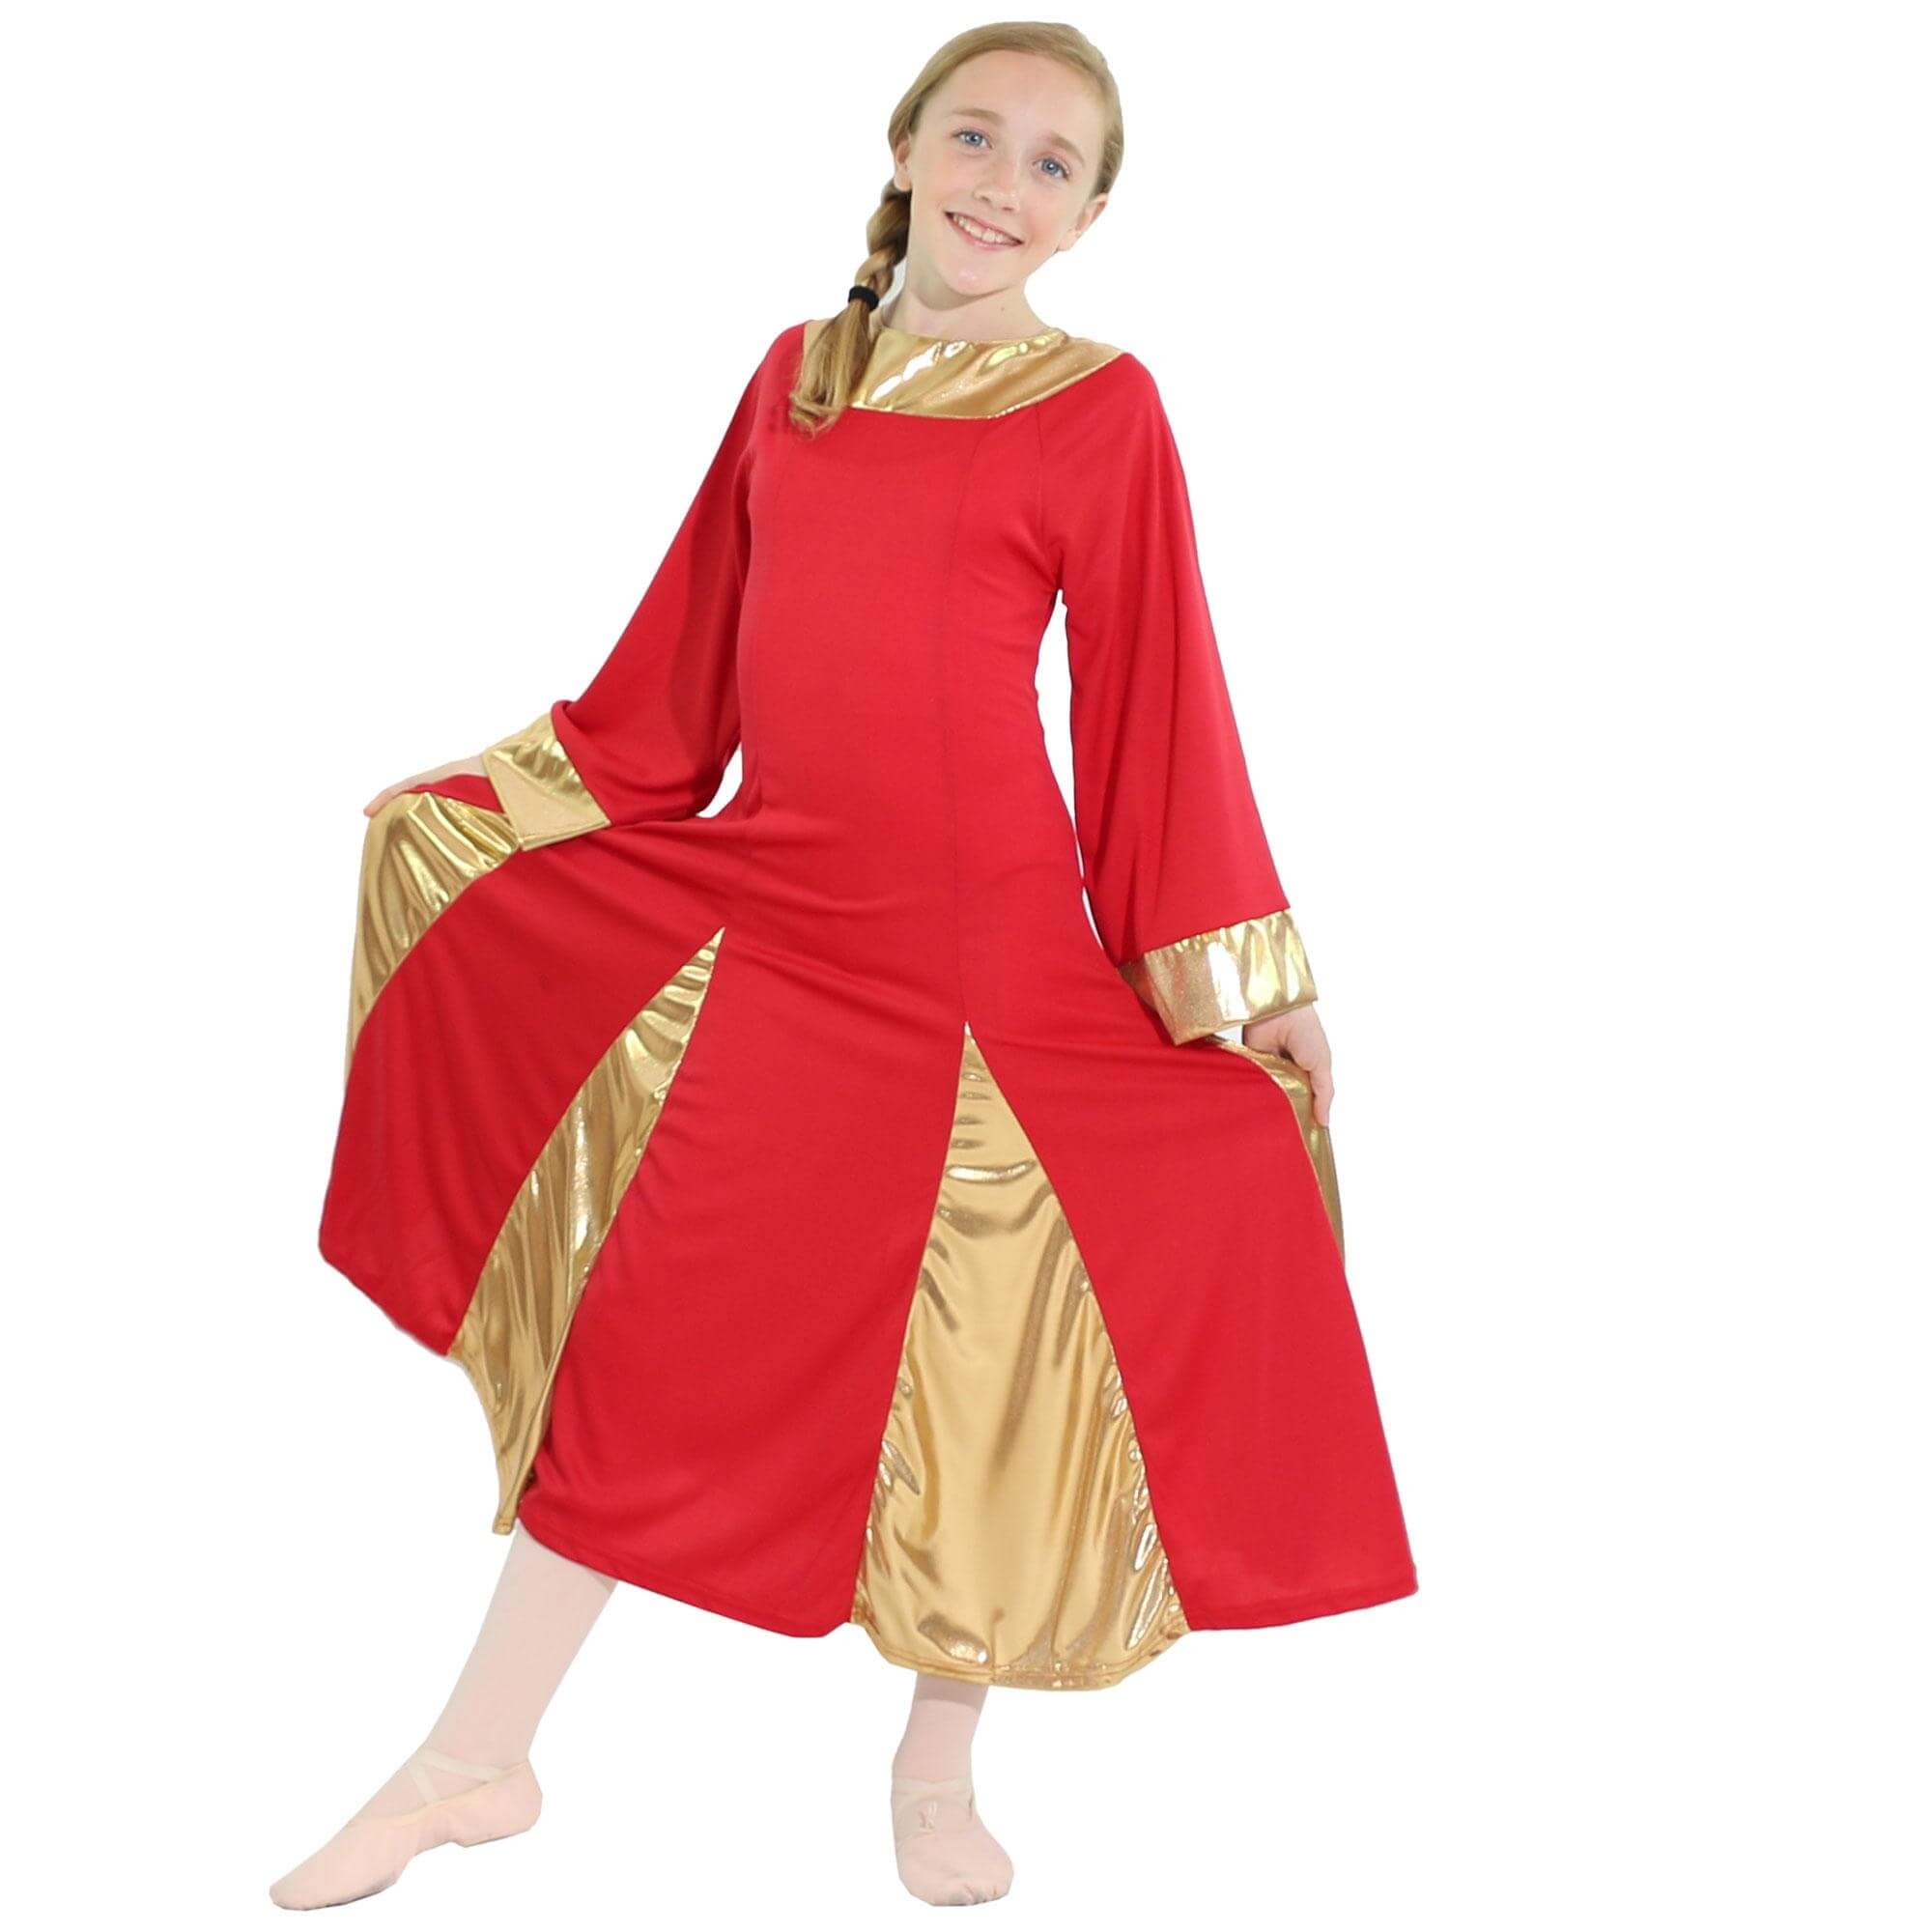 Danzcue Child Praise Robe Dress - Click Image to Close